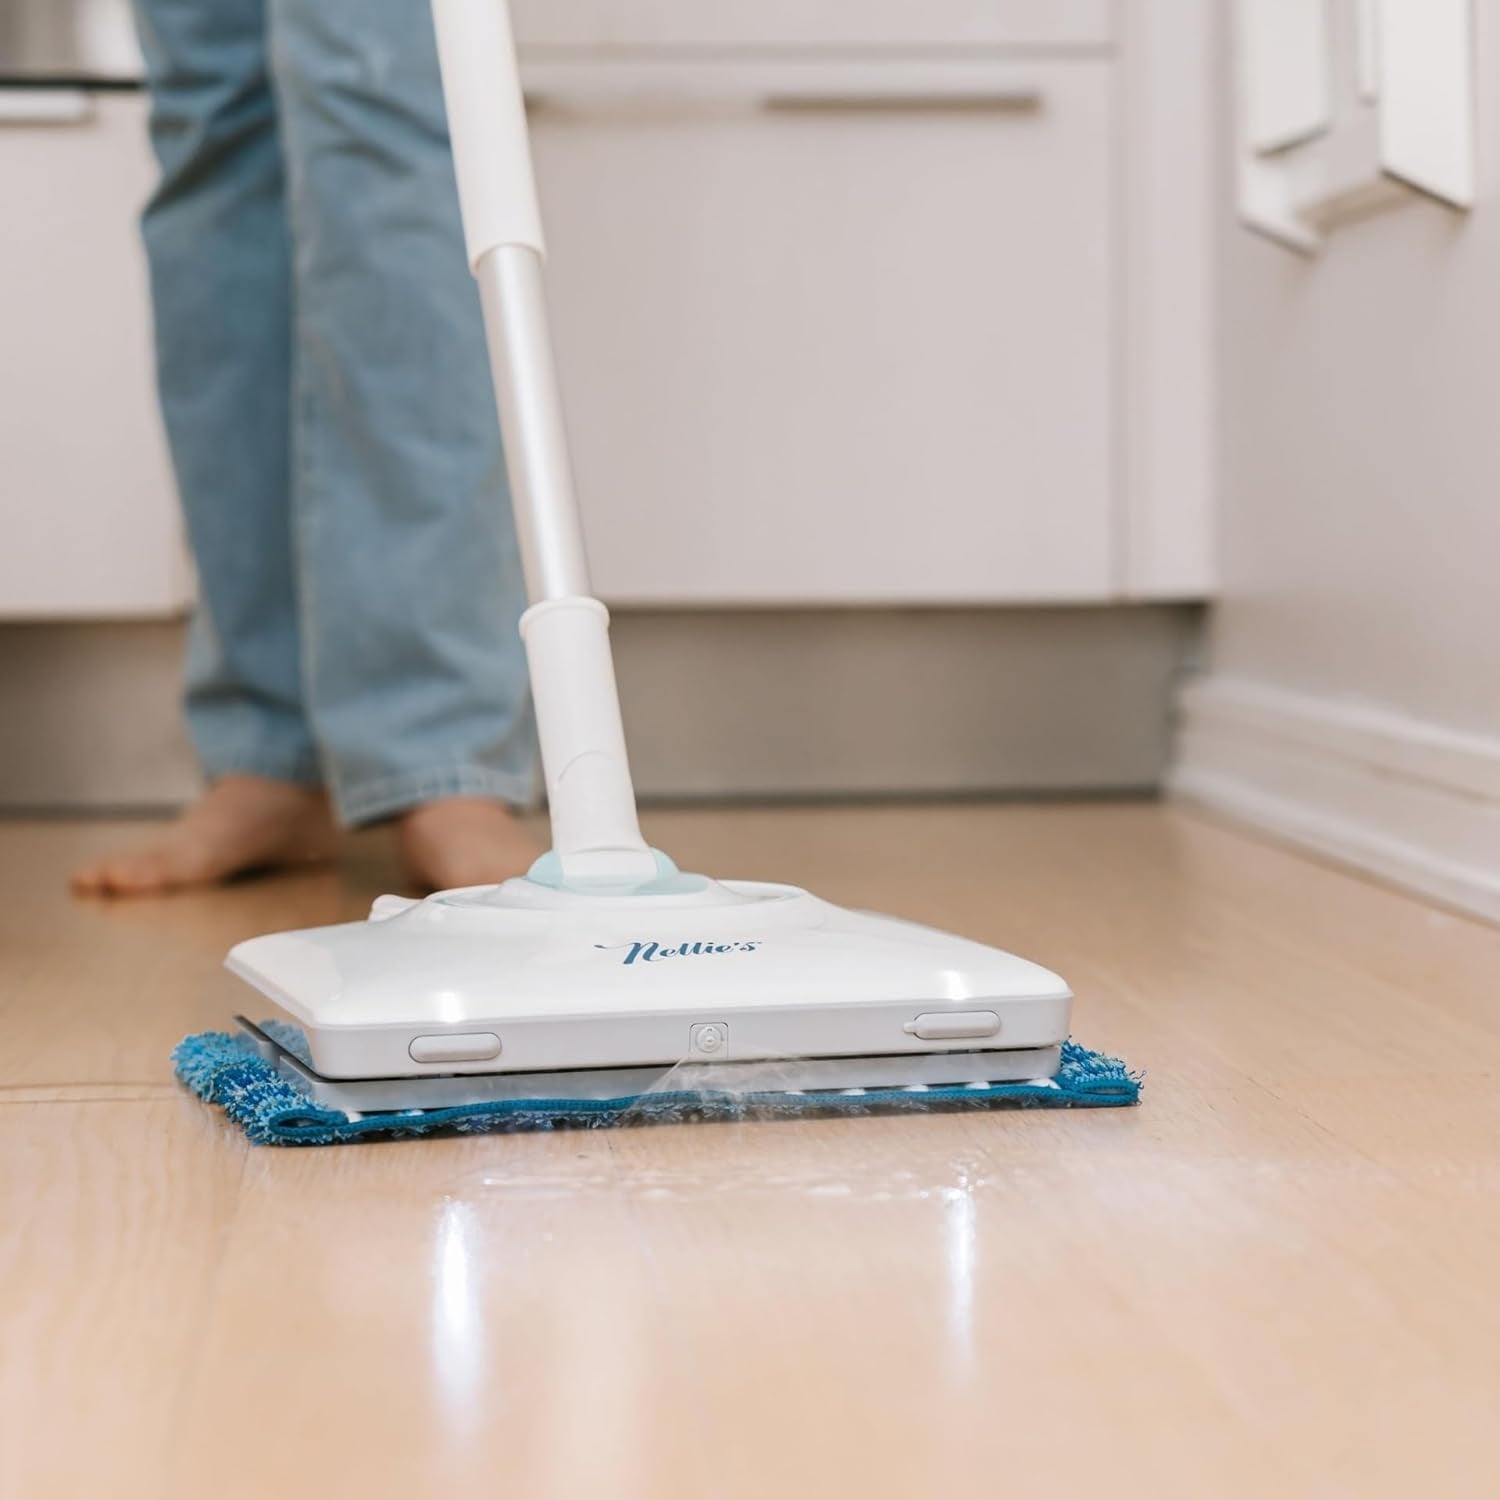 Nellie's WOW Mop Cordless Floor Scrubber - Buckhead Vacuums